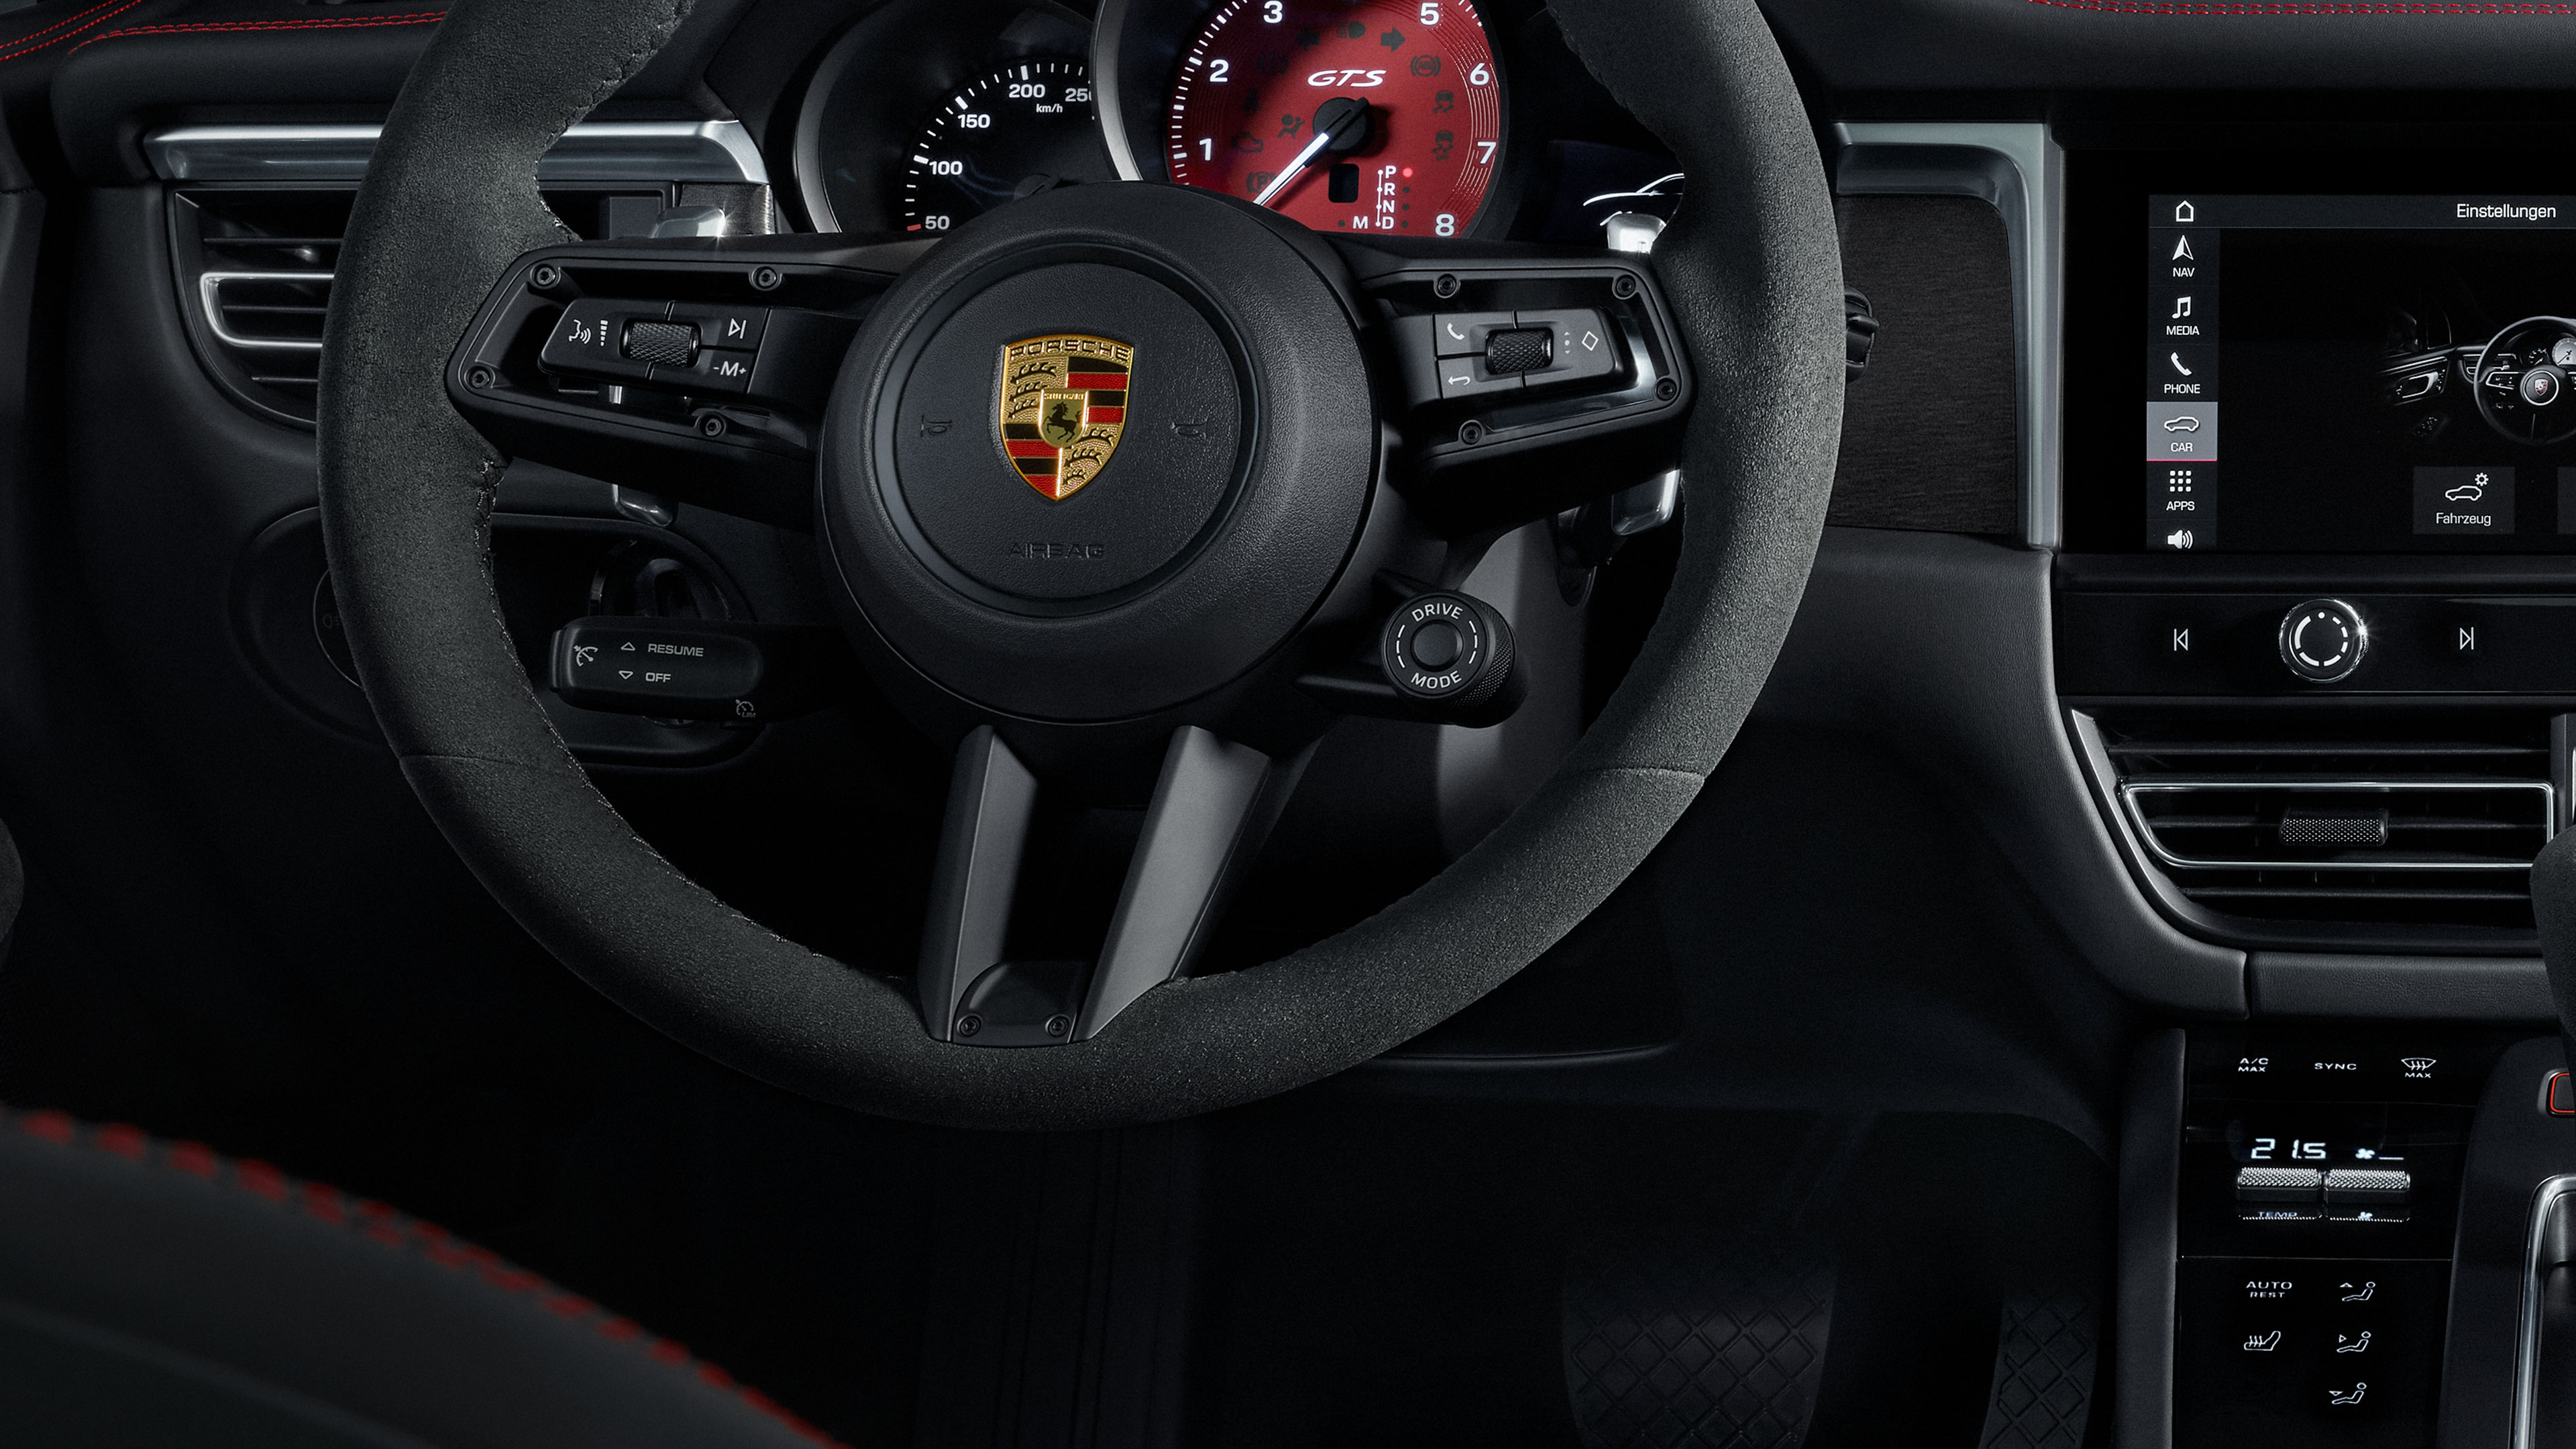 Porsche - Time is precious. スポーツクロノ パッケージ